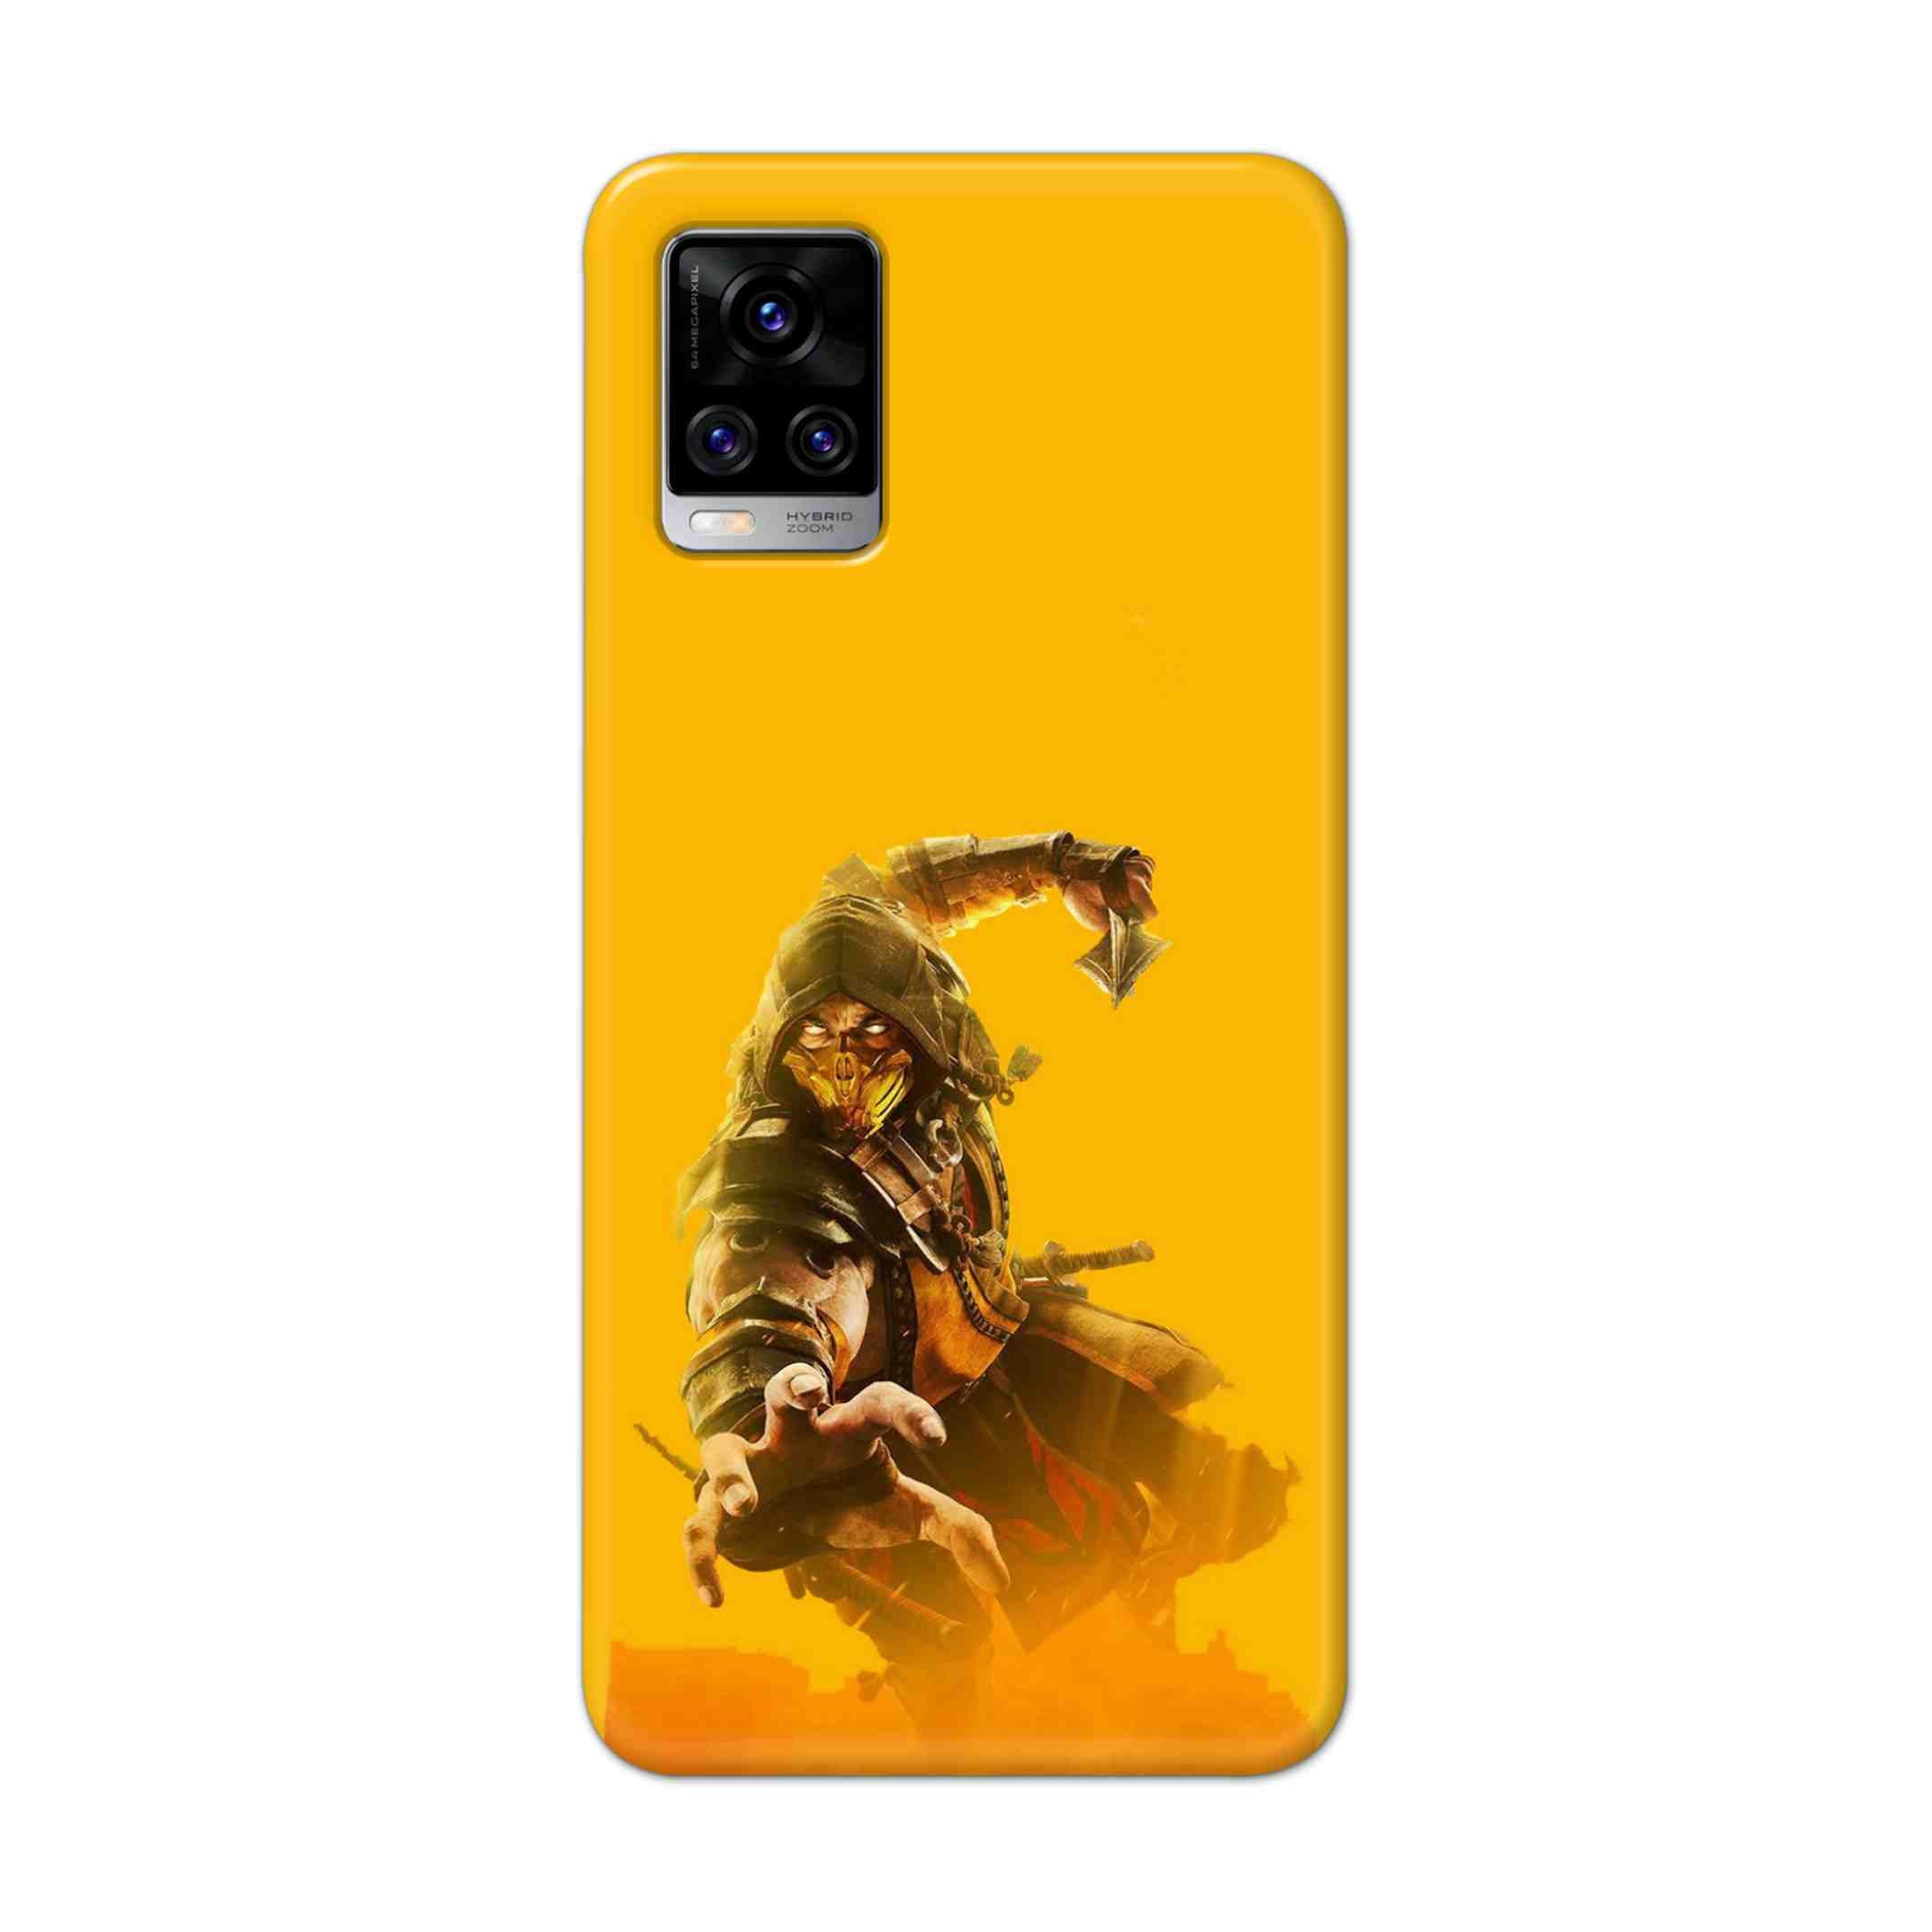 Buy Mortal Kombat Hard Back Mobile Phone Case Cover For Vivo V20 Pro Online